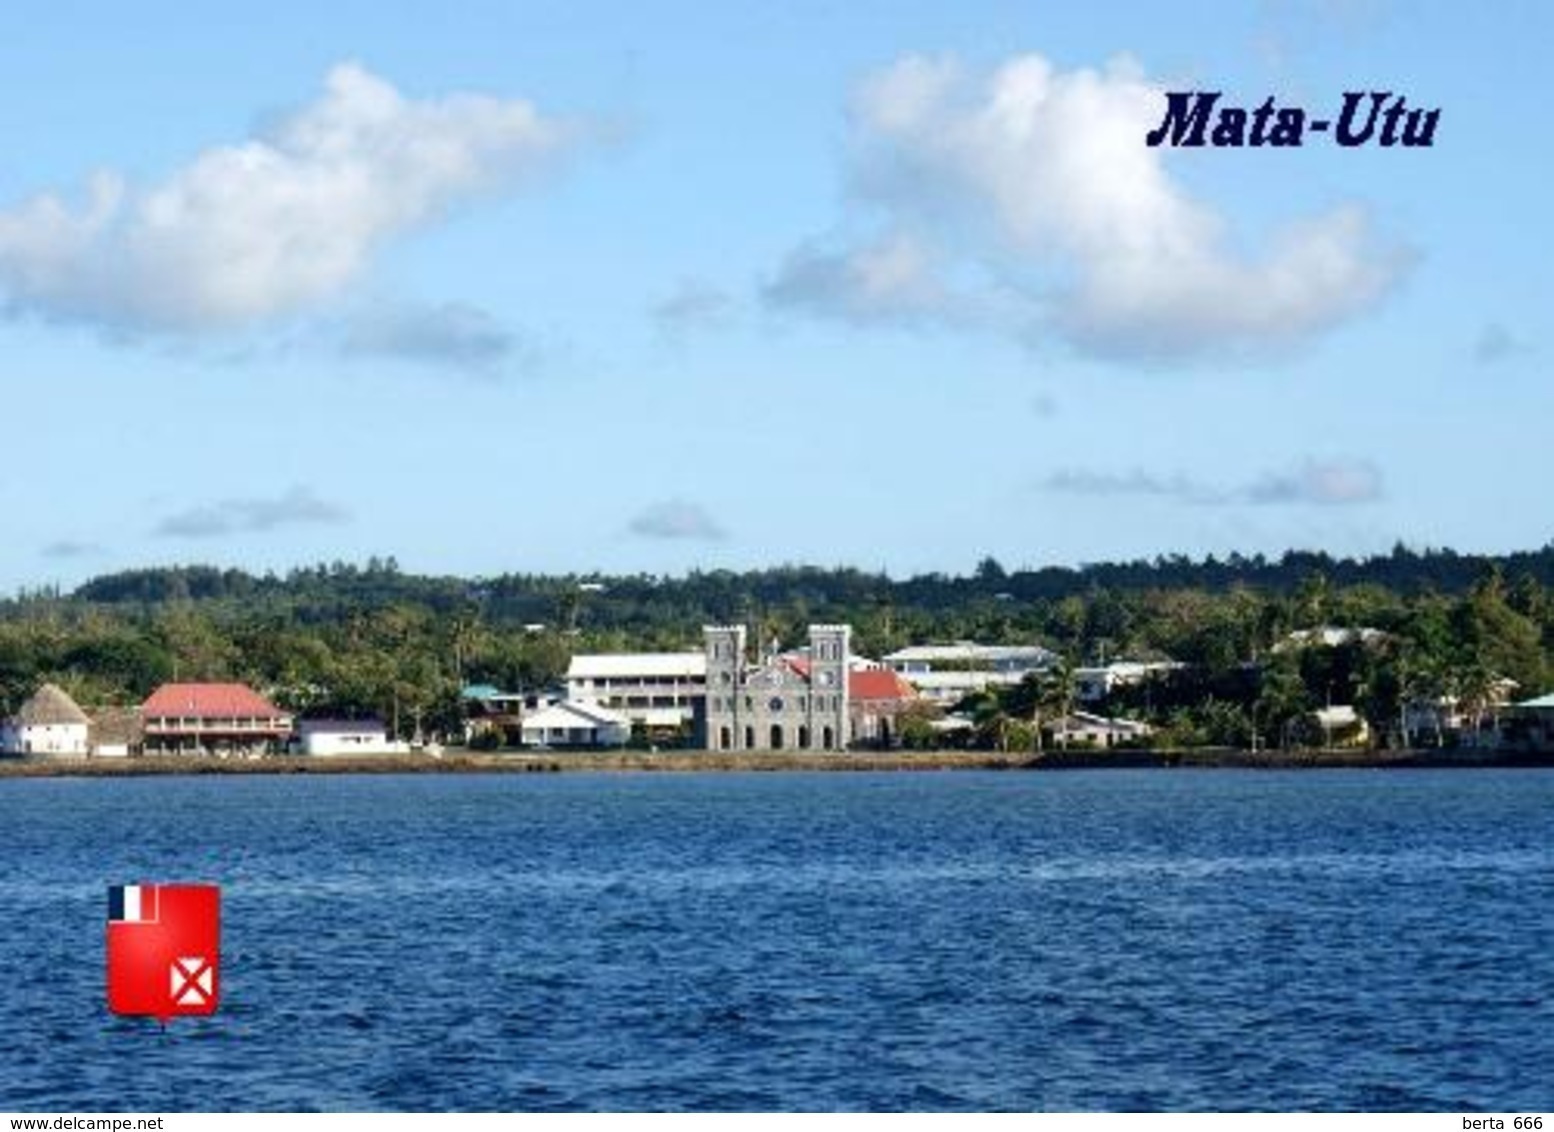 Wallis And Futuna Mata-Utu Waterfront New Postcard - Wallis E Futuna